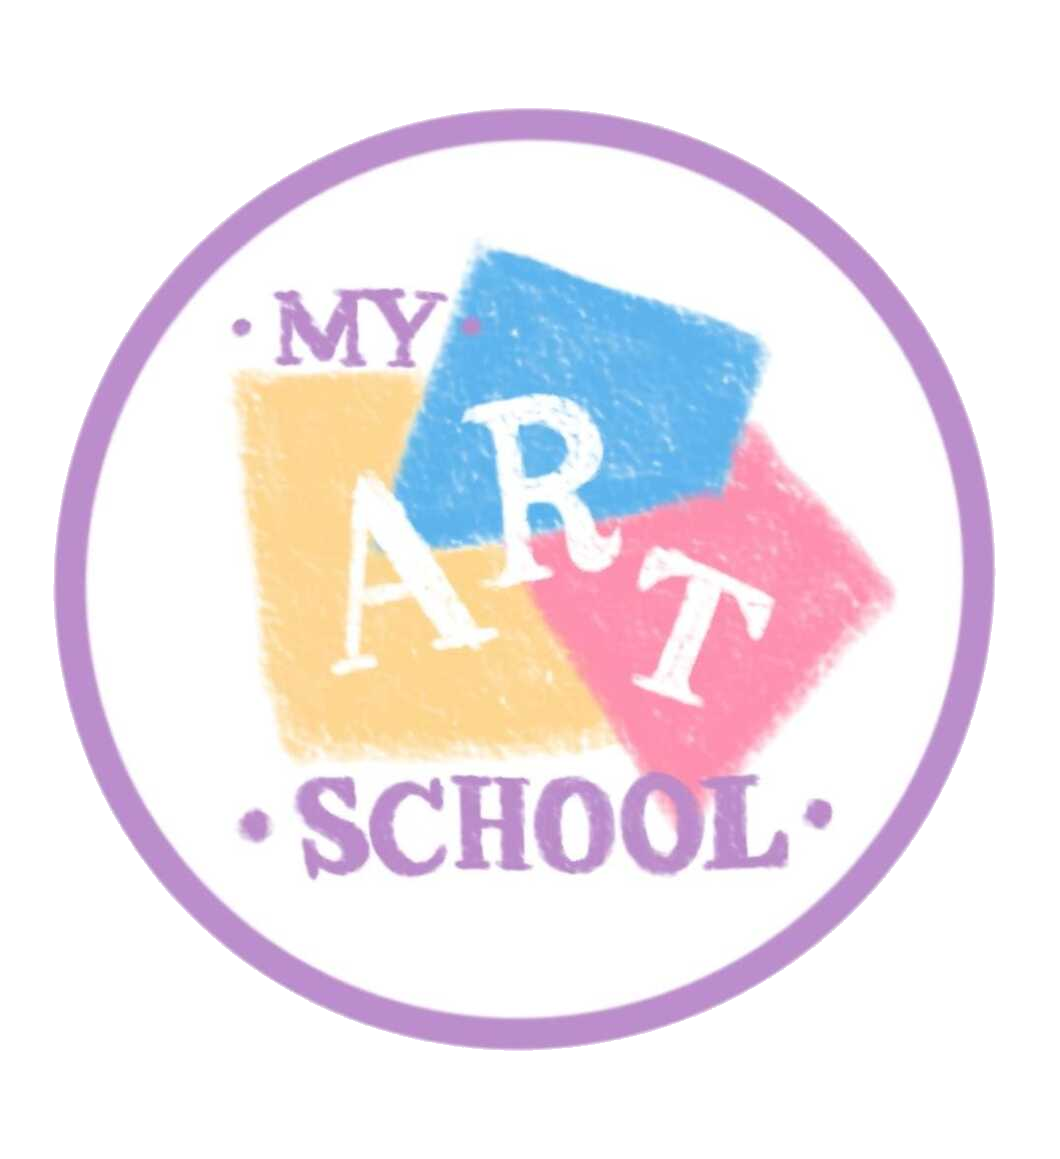 My Art School Logo